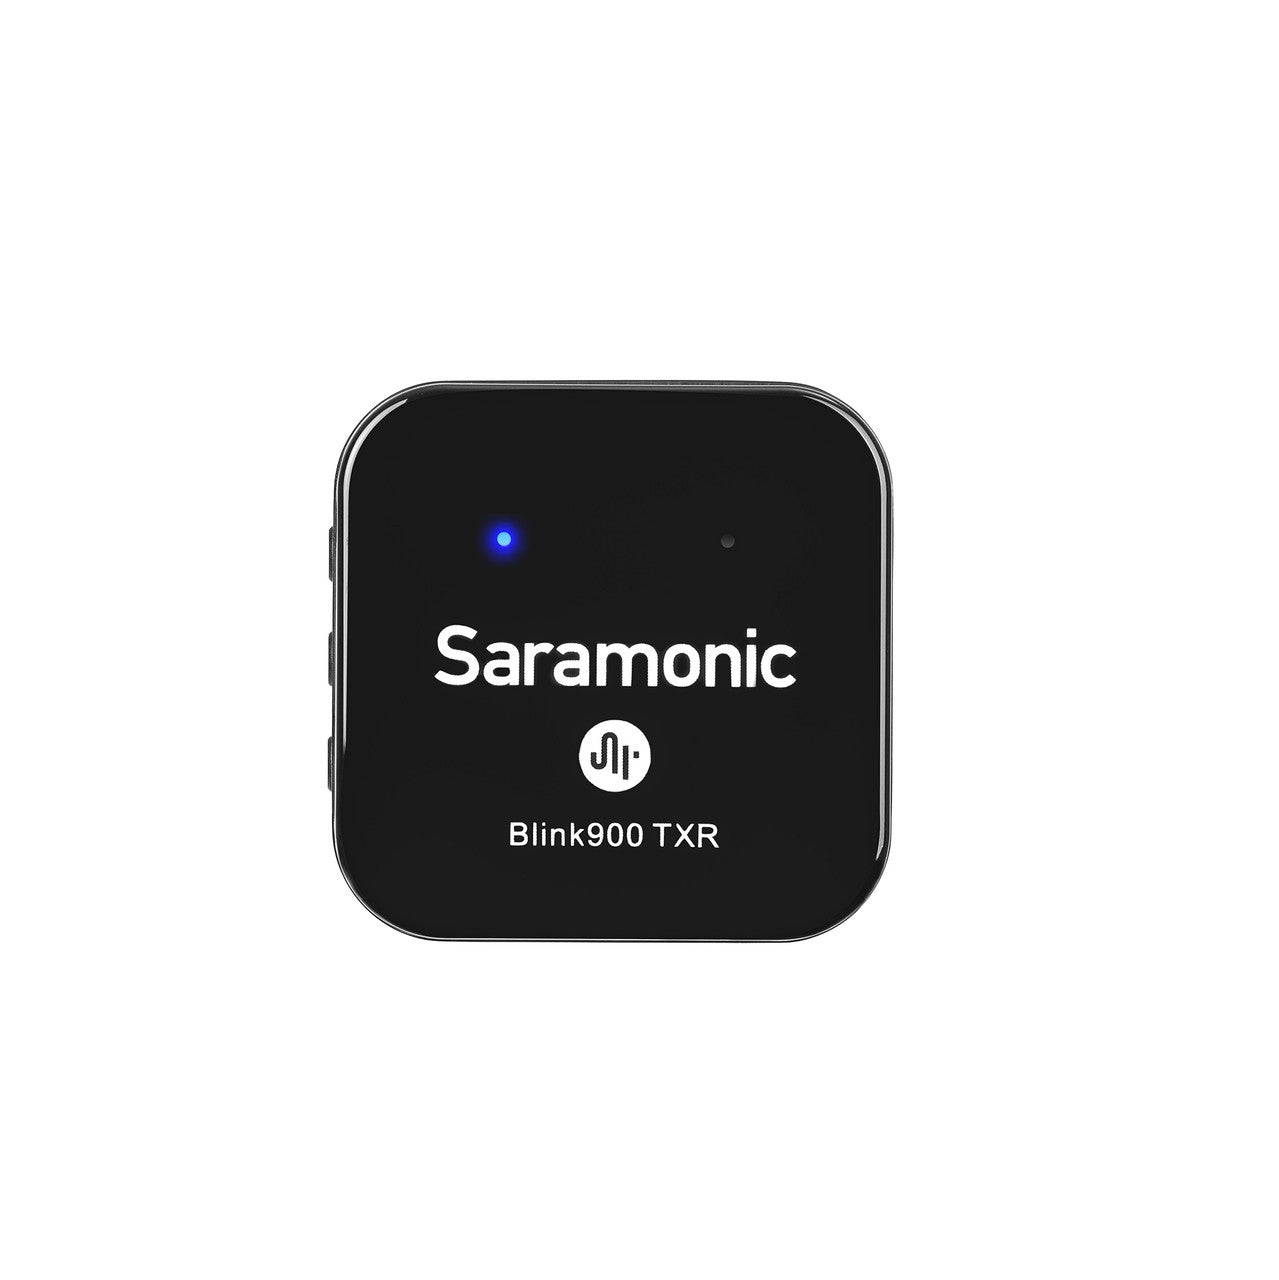 Saramonic 2.4G wireless microphone with on-board recording transmitter - Black